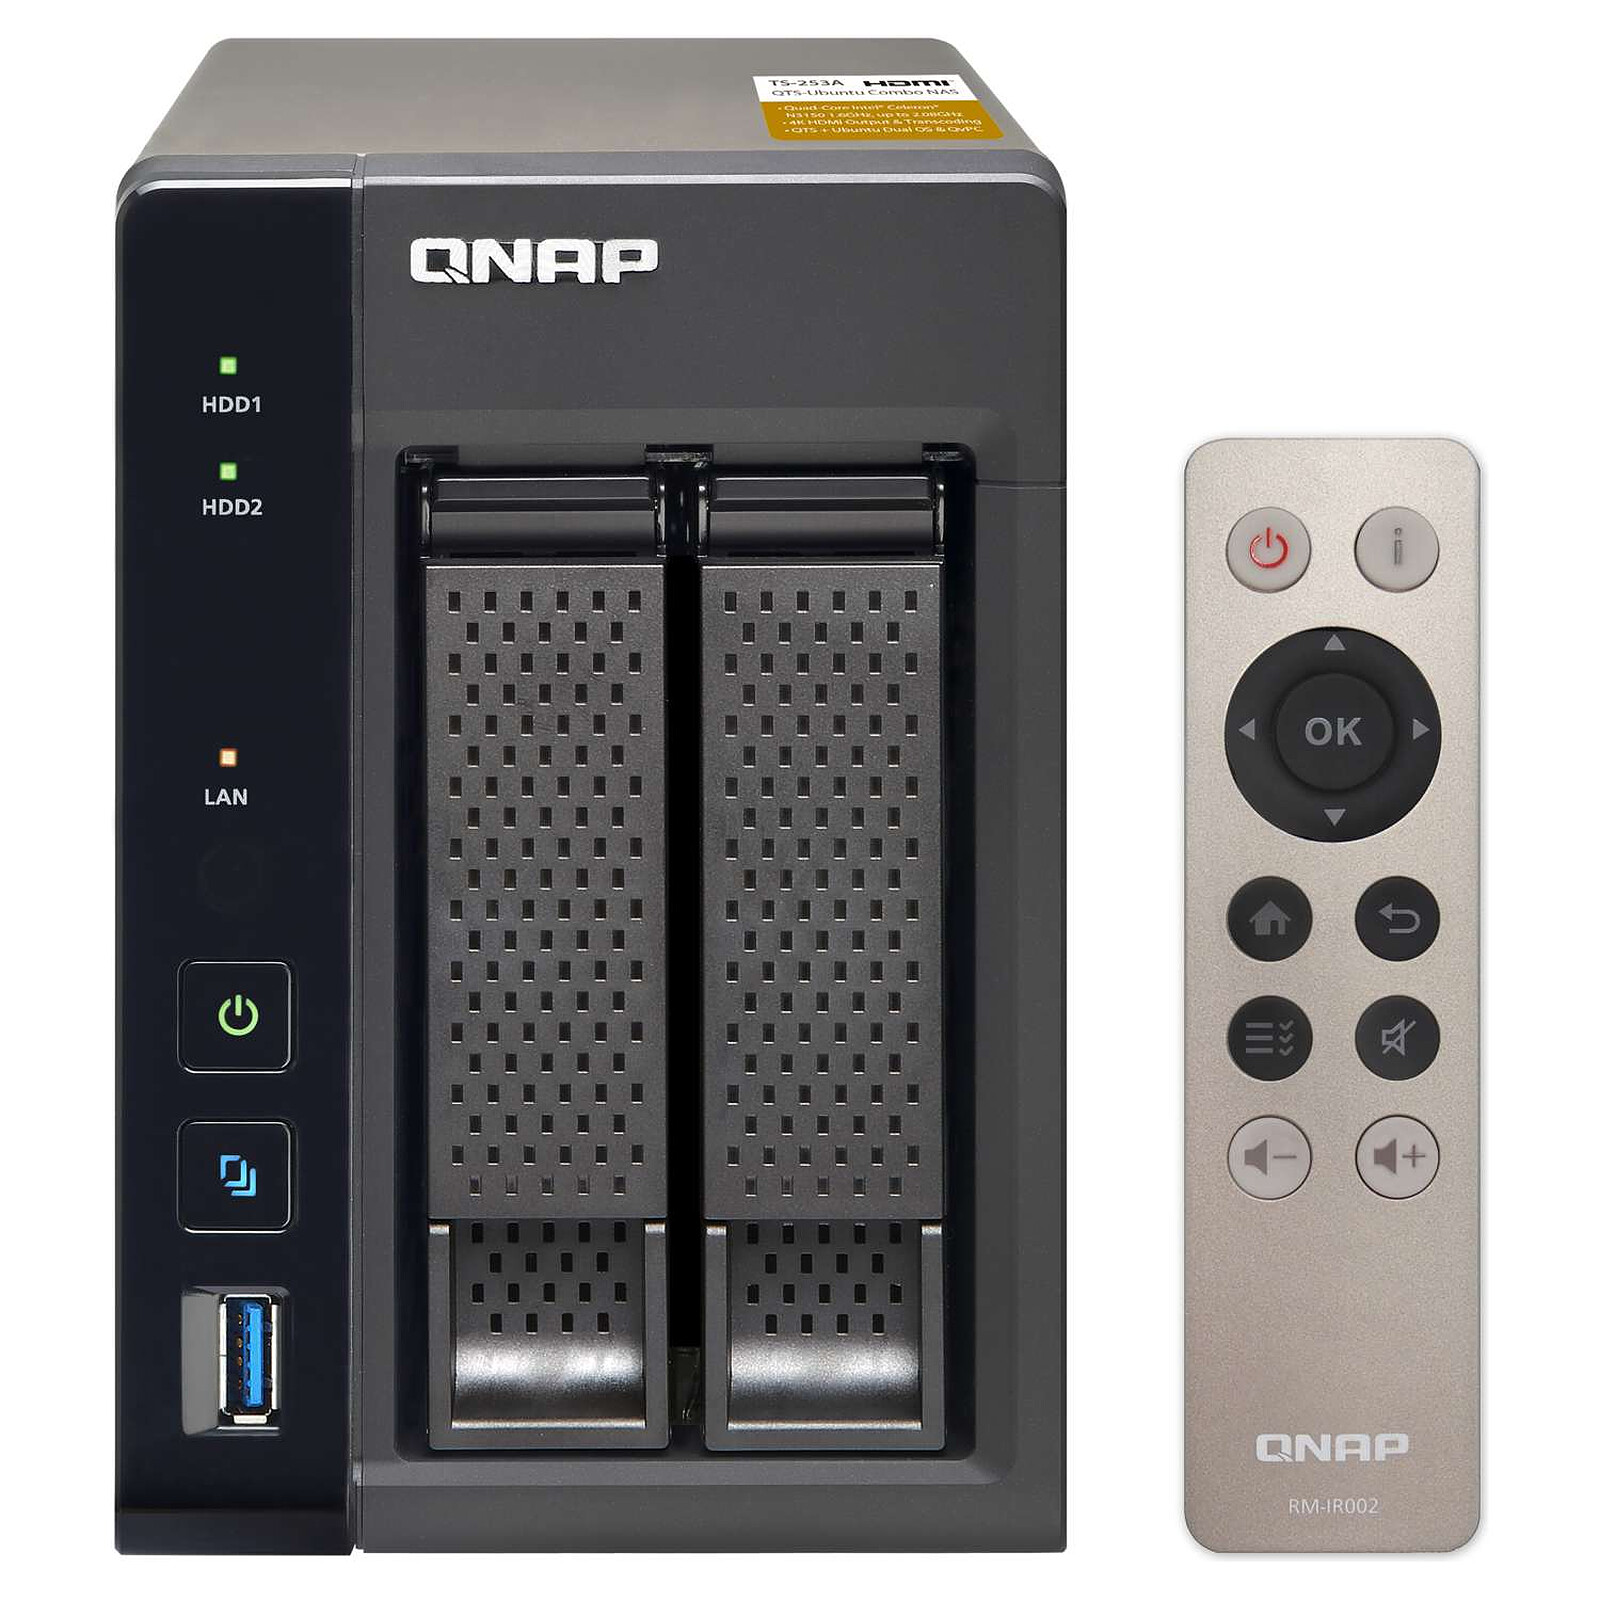 QNAP TS-253A-8G 12TB 2 Baie NAS Solution Installé avec 2 x 6To Western Digital Red Pro Disques GDPR conforme 